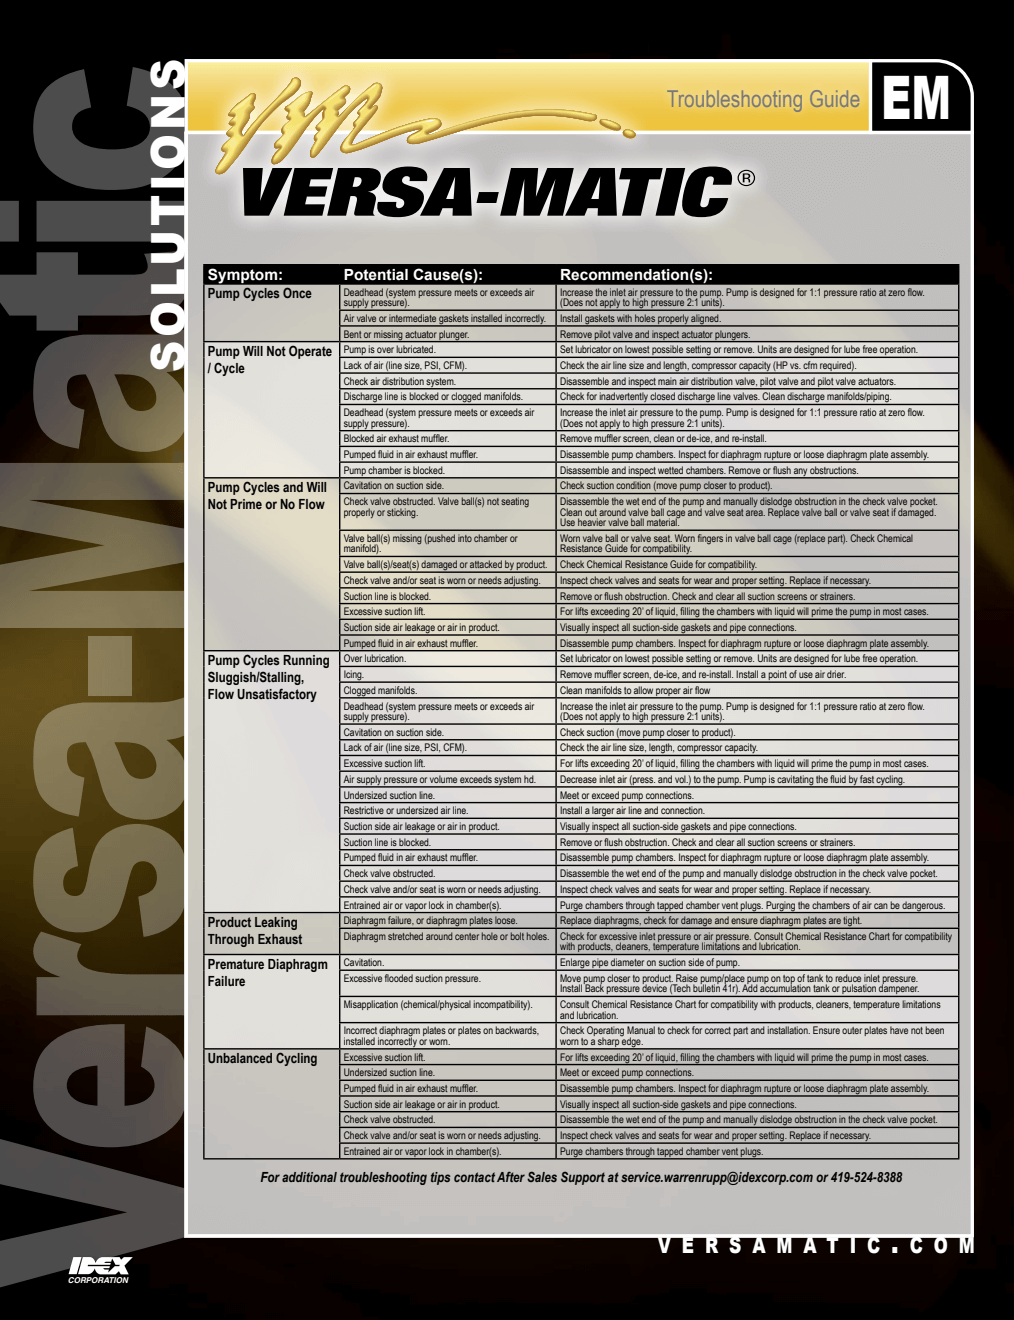 Versa-matic Troubleshooting Guide